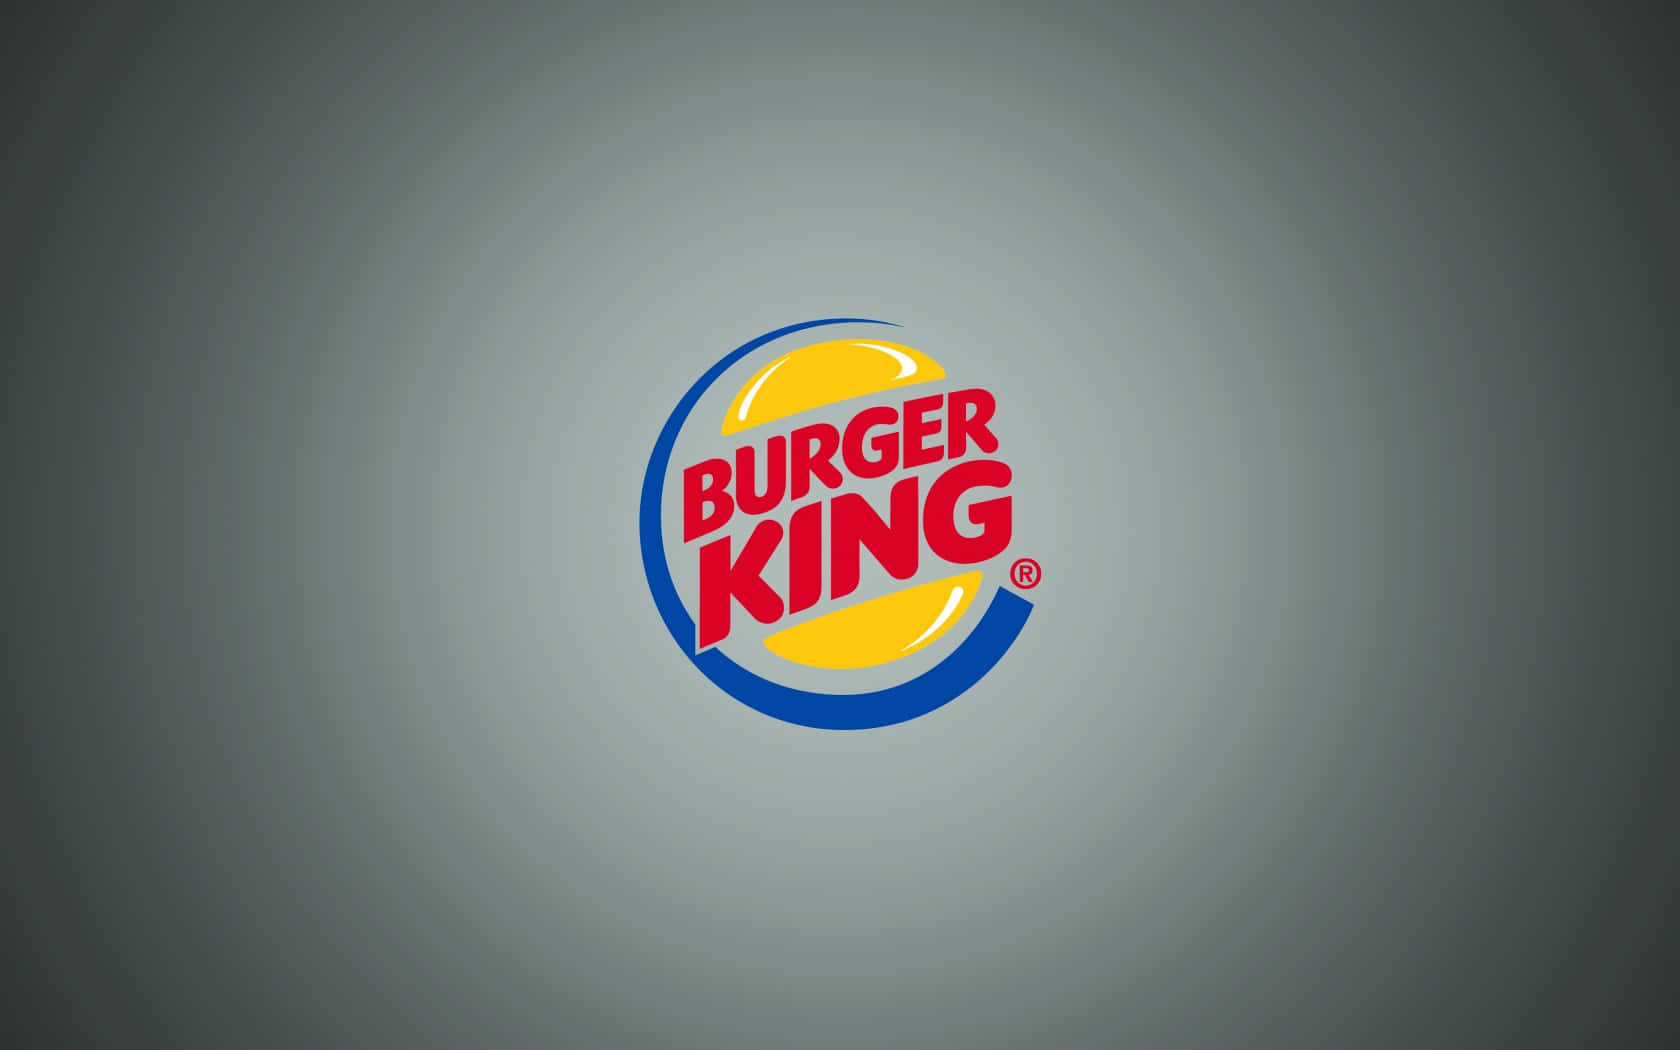 Burger King Logo On A Dark Background